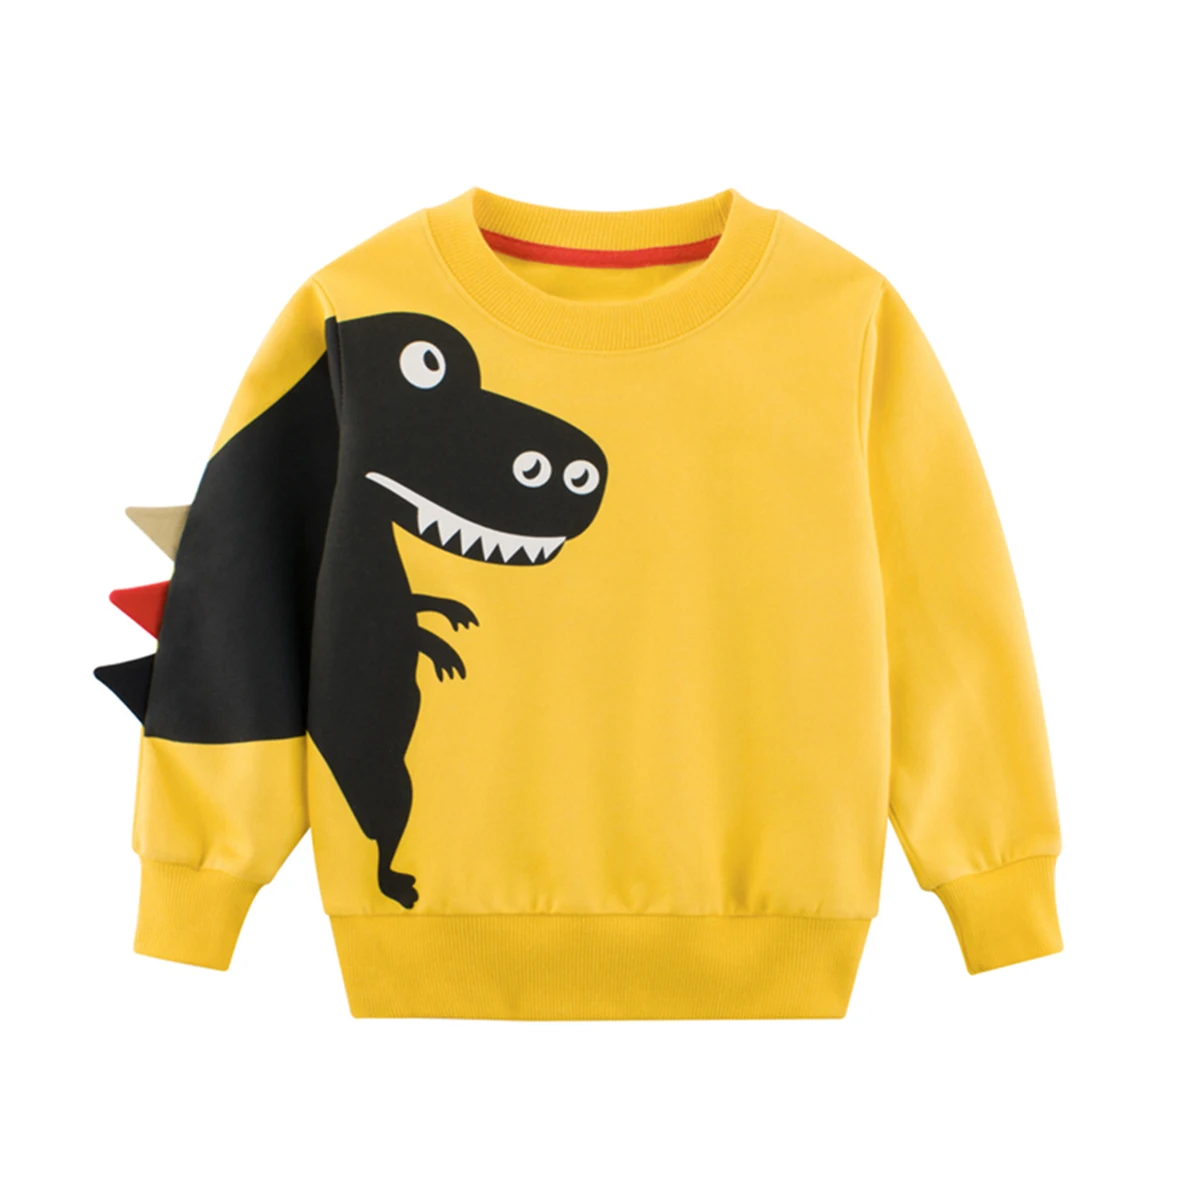 

Kids Pullover Sweatshirt Little Boys Spikes On Long Sleeve Cotton Tops Dinosaur Graphic Round Neck Sports Active Outerwear